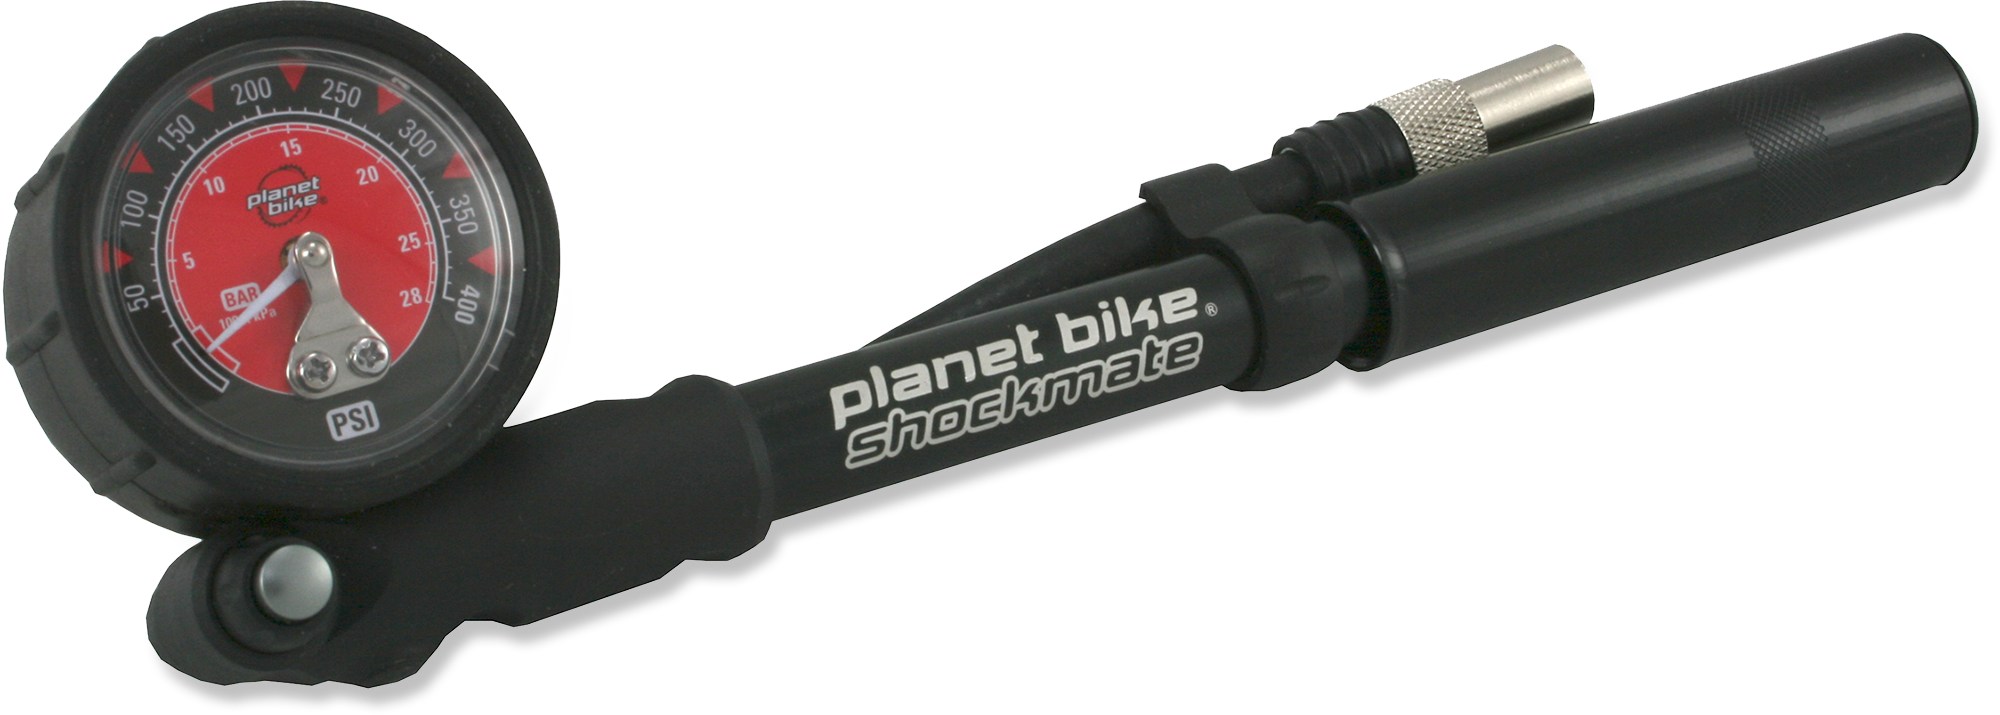 mtn bike shock pump